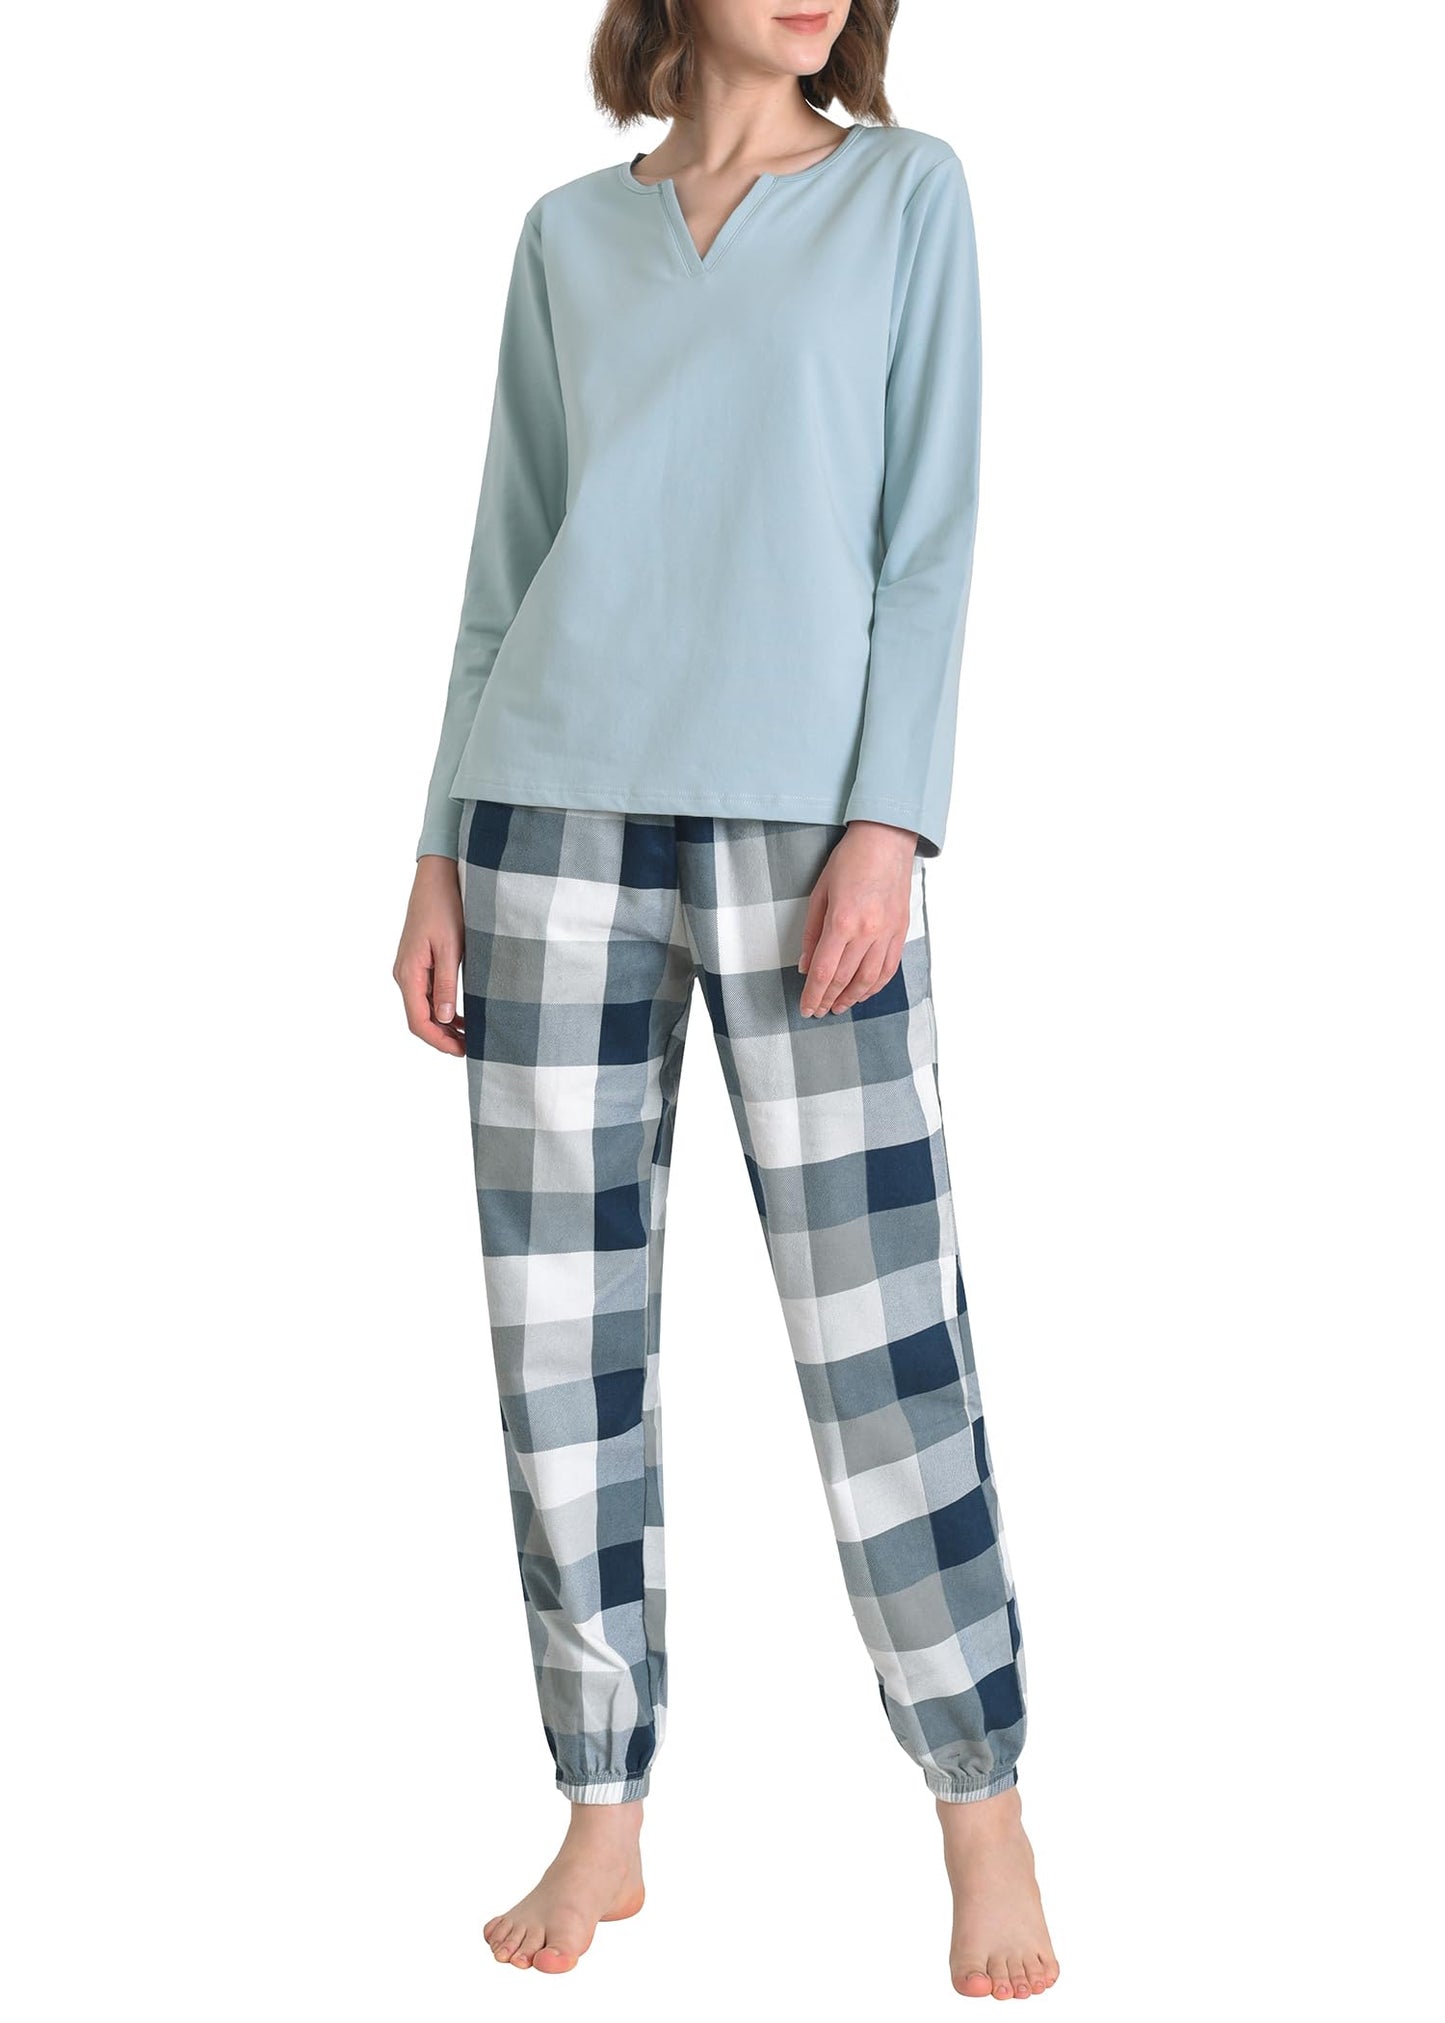 Women's 2 Piece Pajama Lounge Set Long Sleeves Top Flannel Plaid Joggers - Latuza